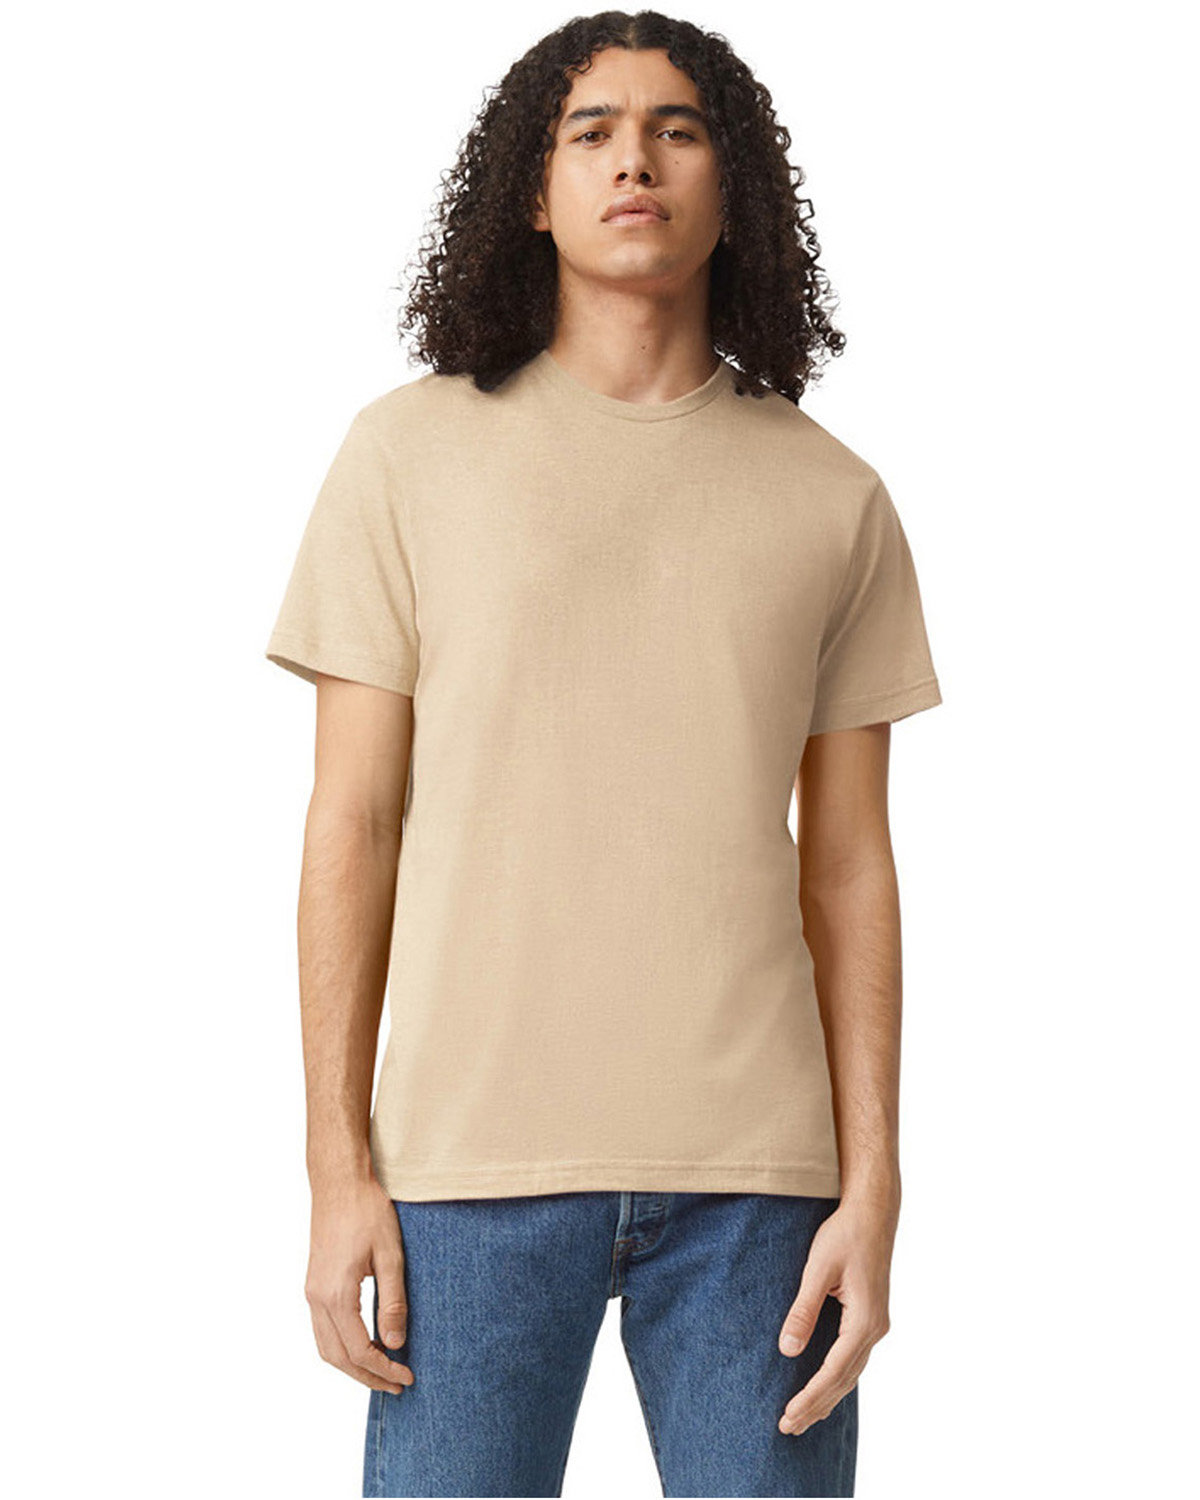 American Apparel Unisex CVC T-Shirt HEATHER BONE 